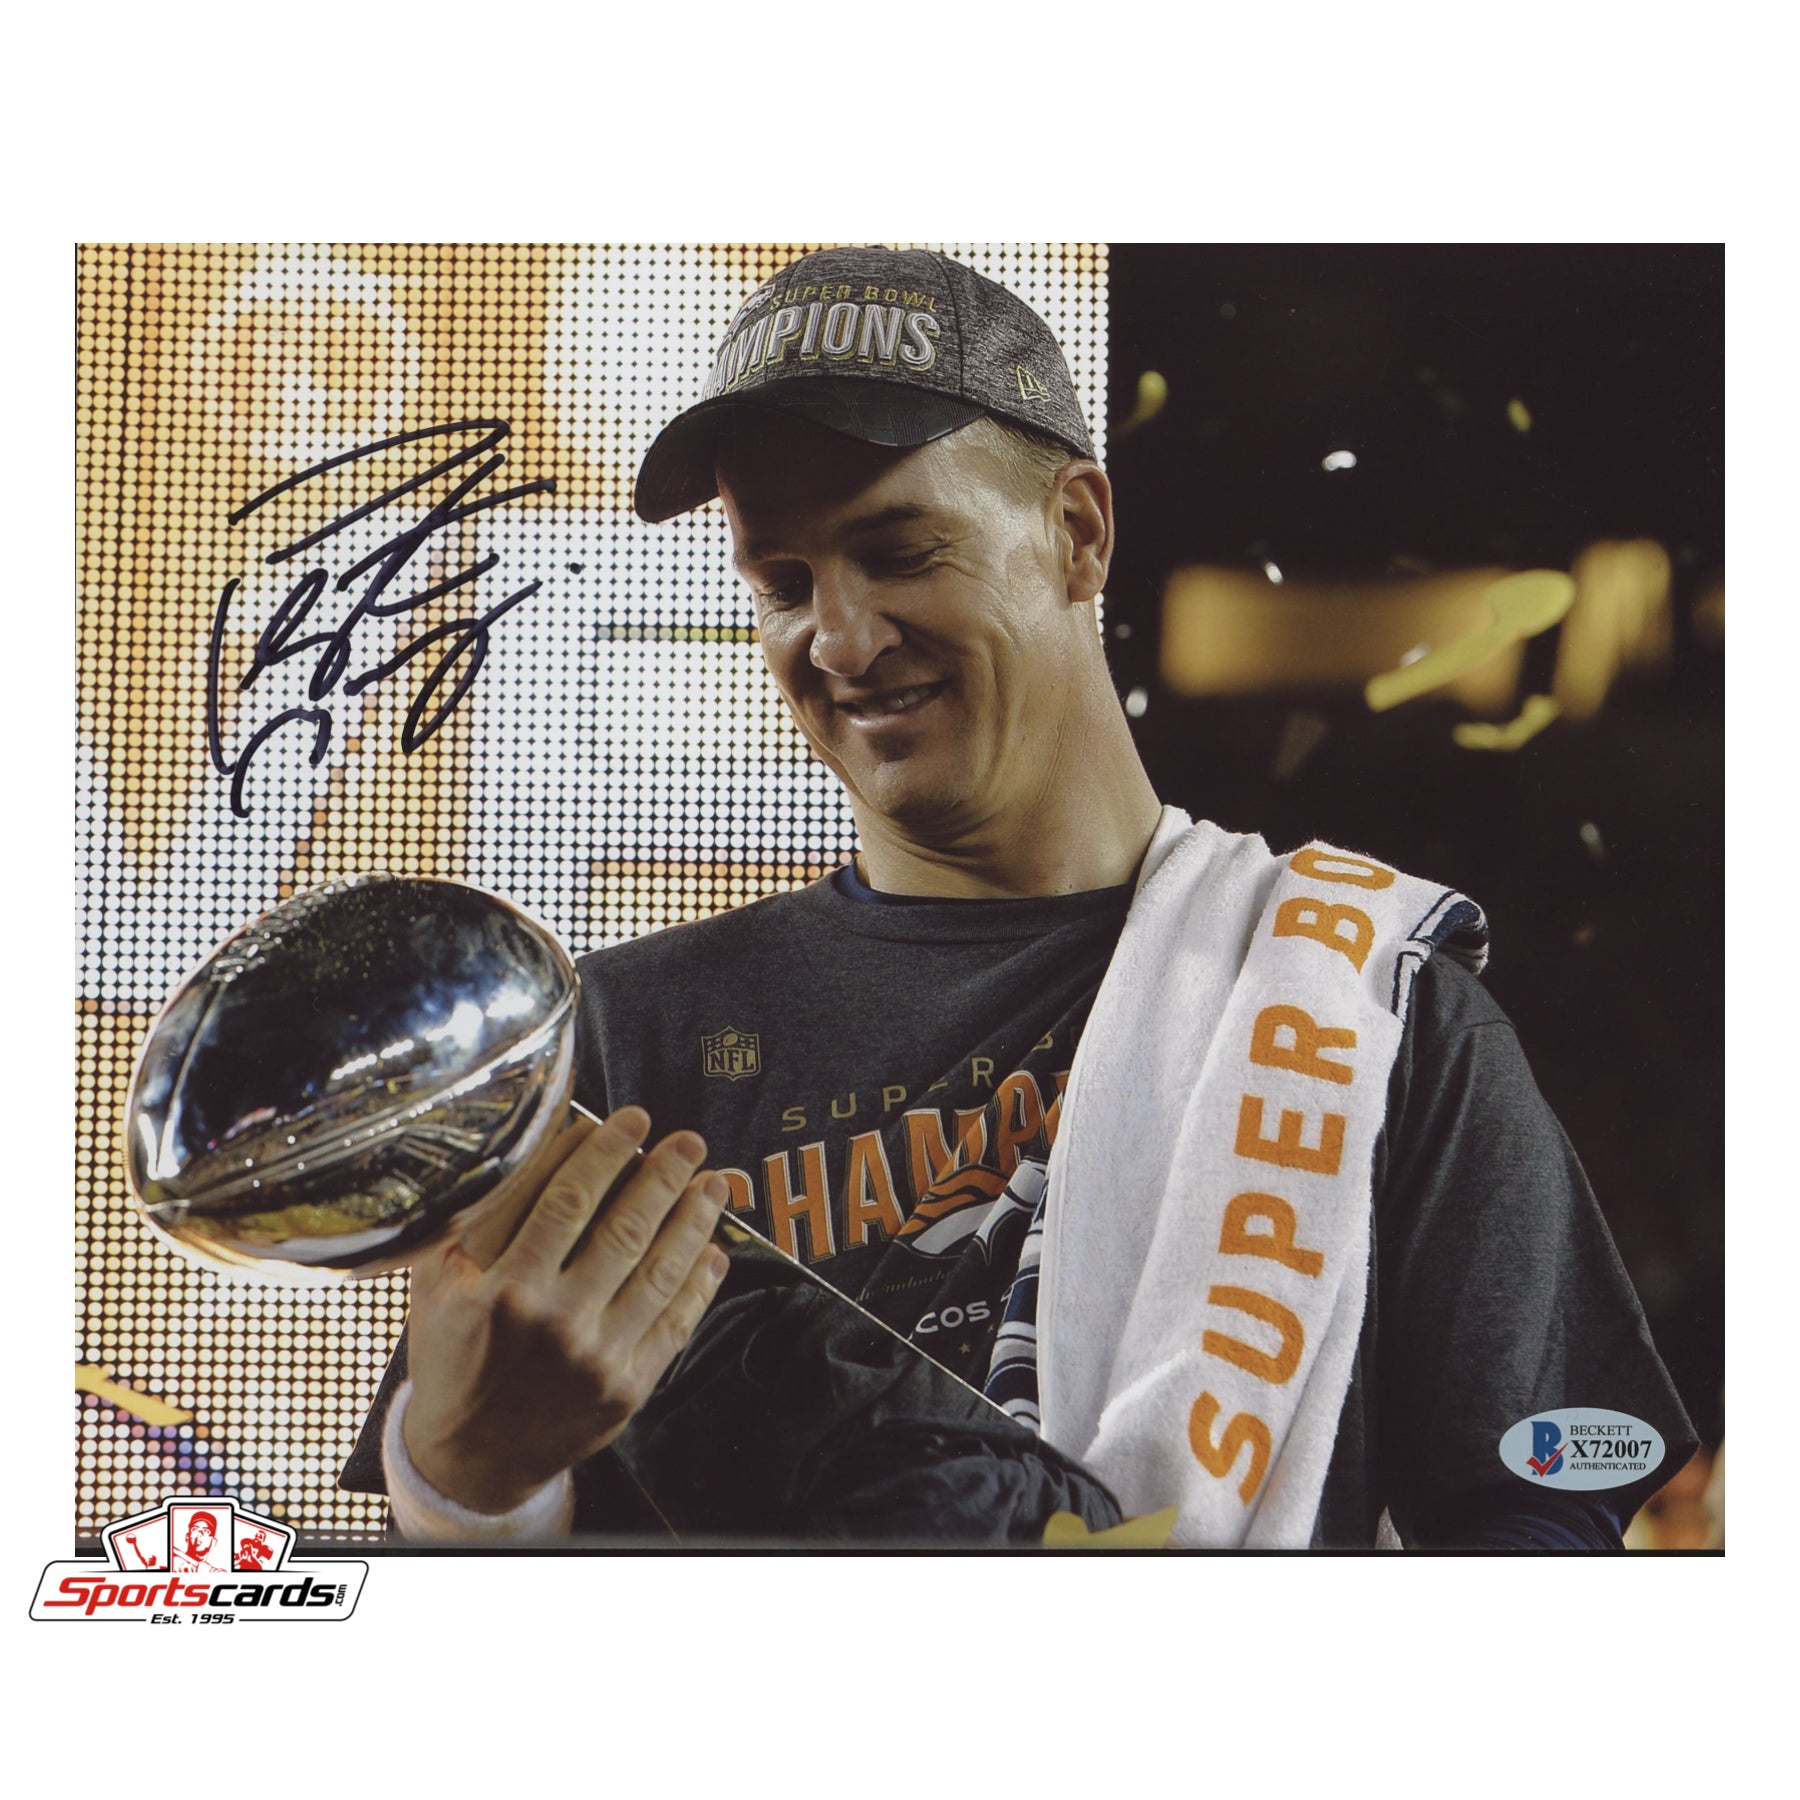 Peyton Manning Signed Autographed 8x10 Photograph Beckett BAS COA